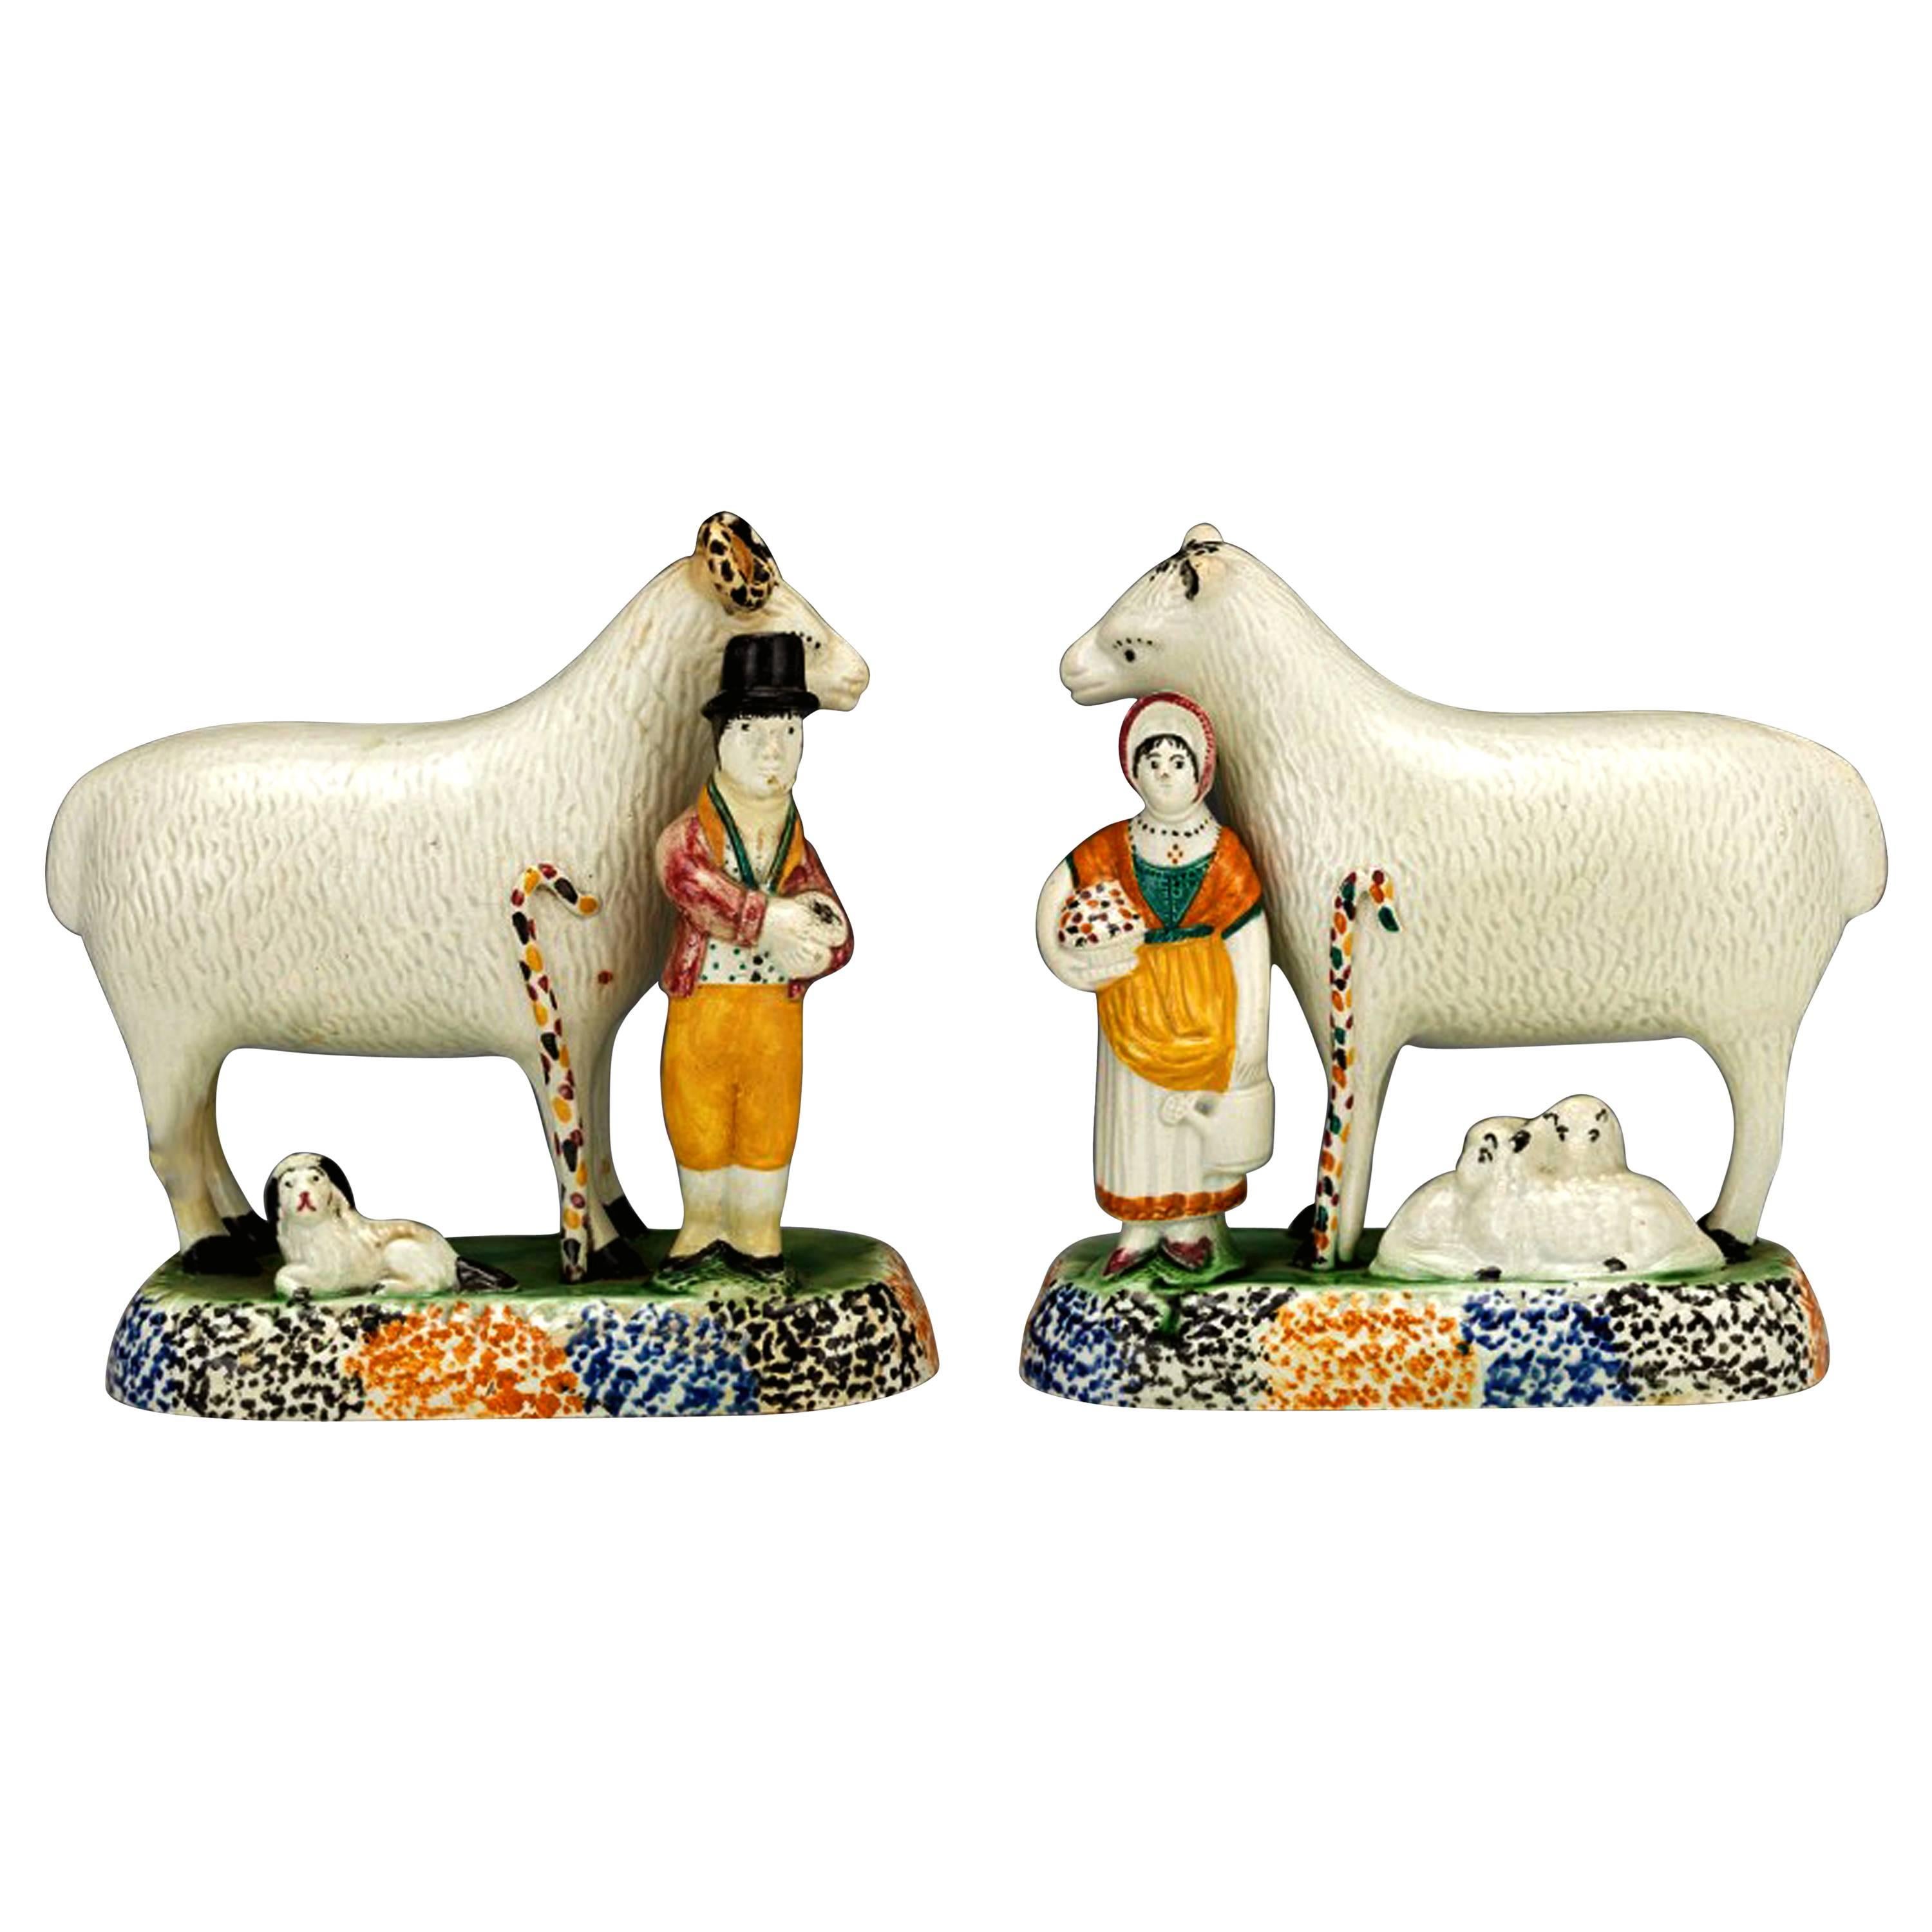 Pair of Yorkshire Prattware Ram and Sheep Figures with Shepherd and Shepherdess